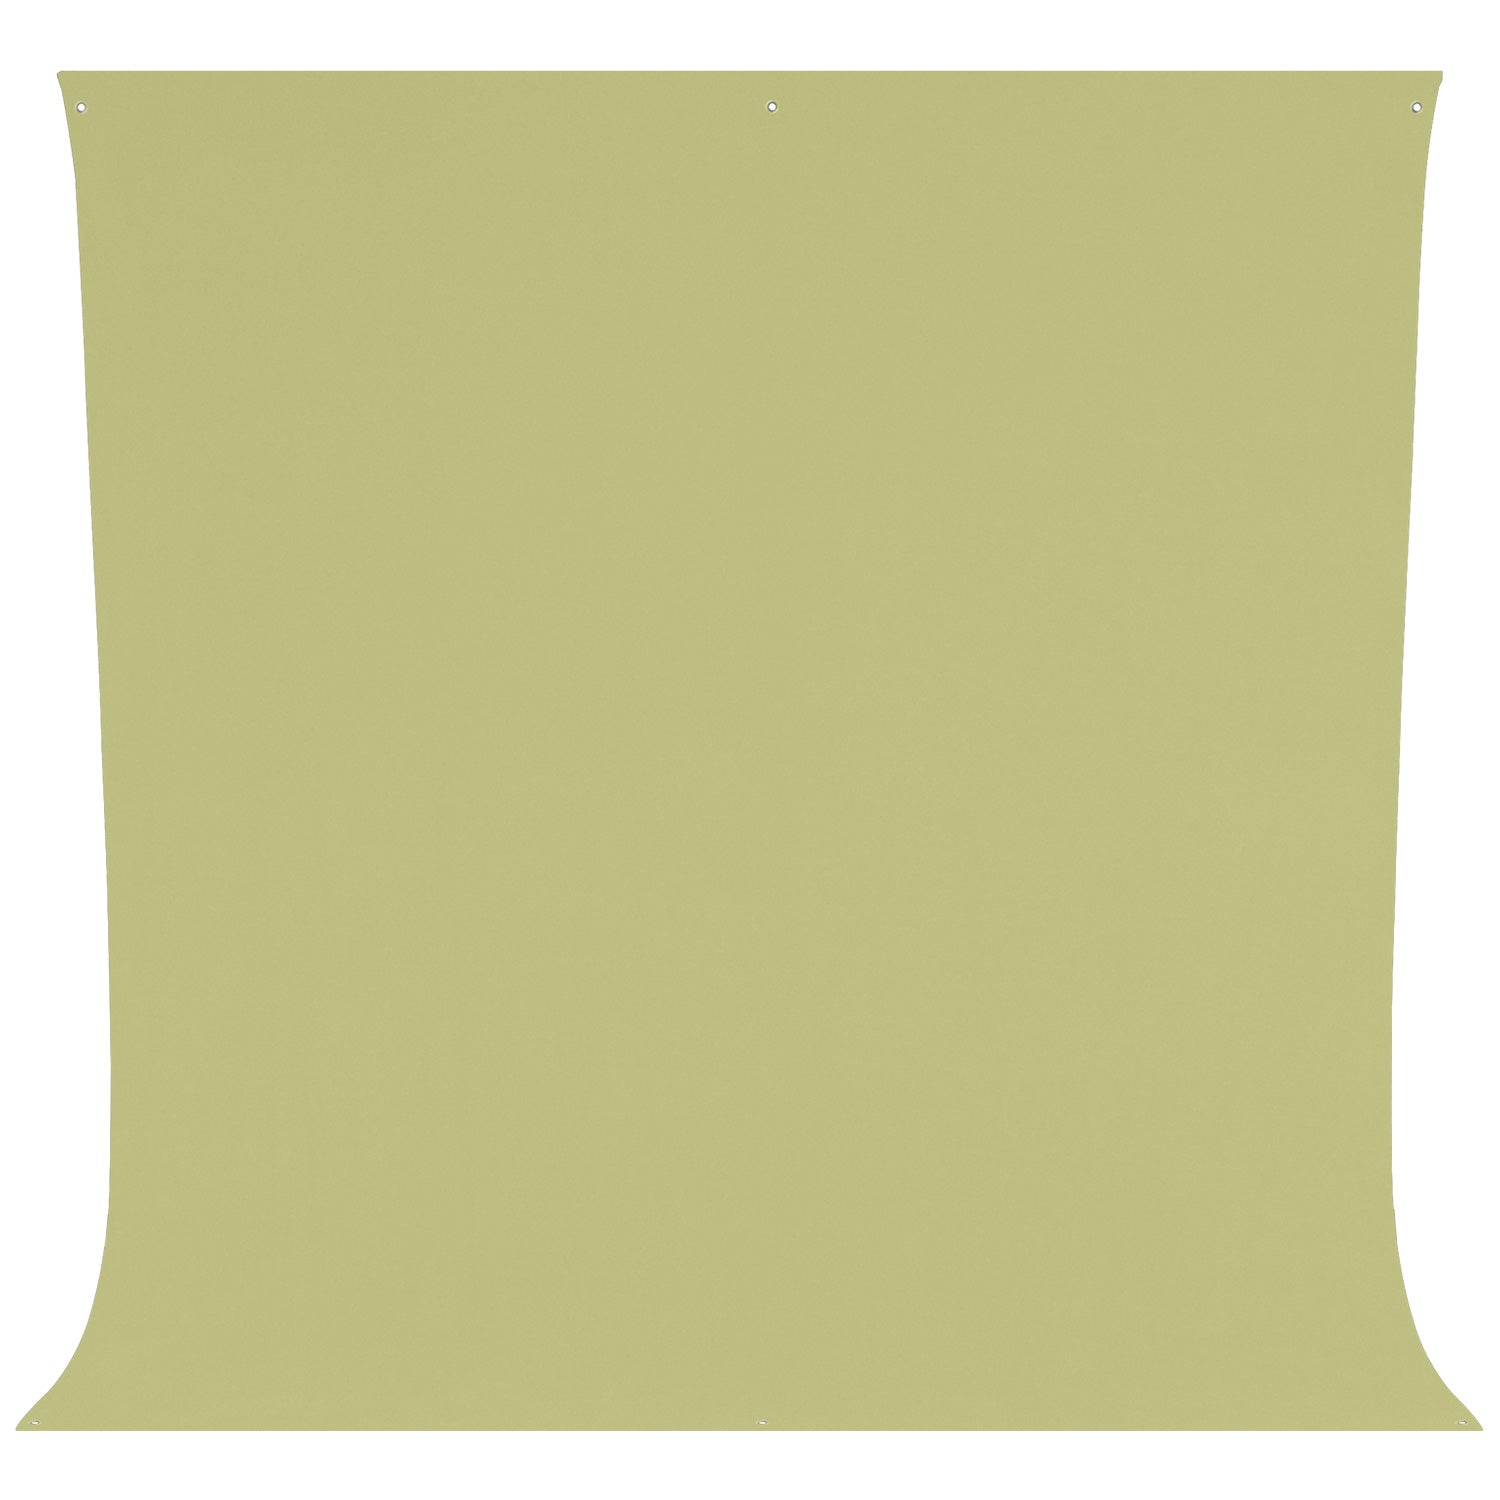 Wrinkle-Resistant Backdrop - Light Moss Green (9' x 10')